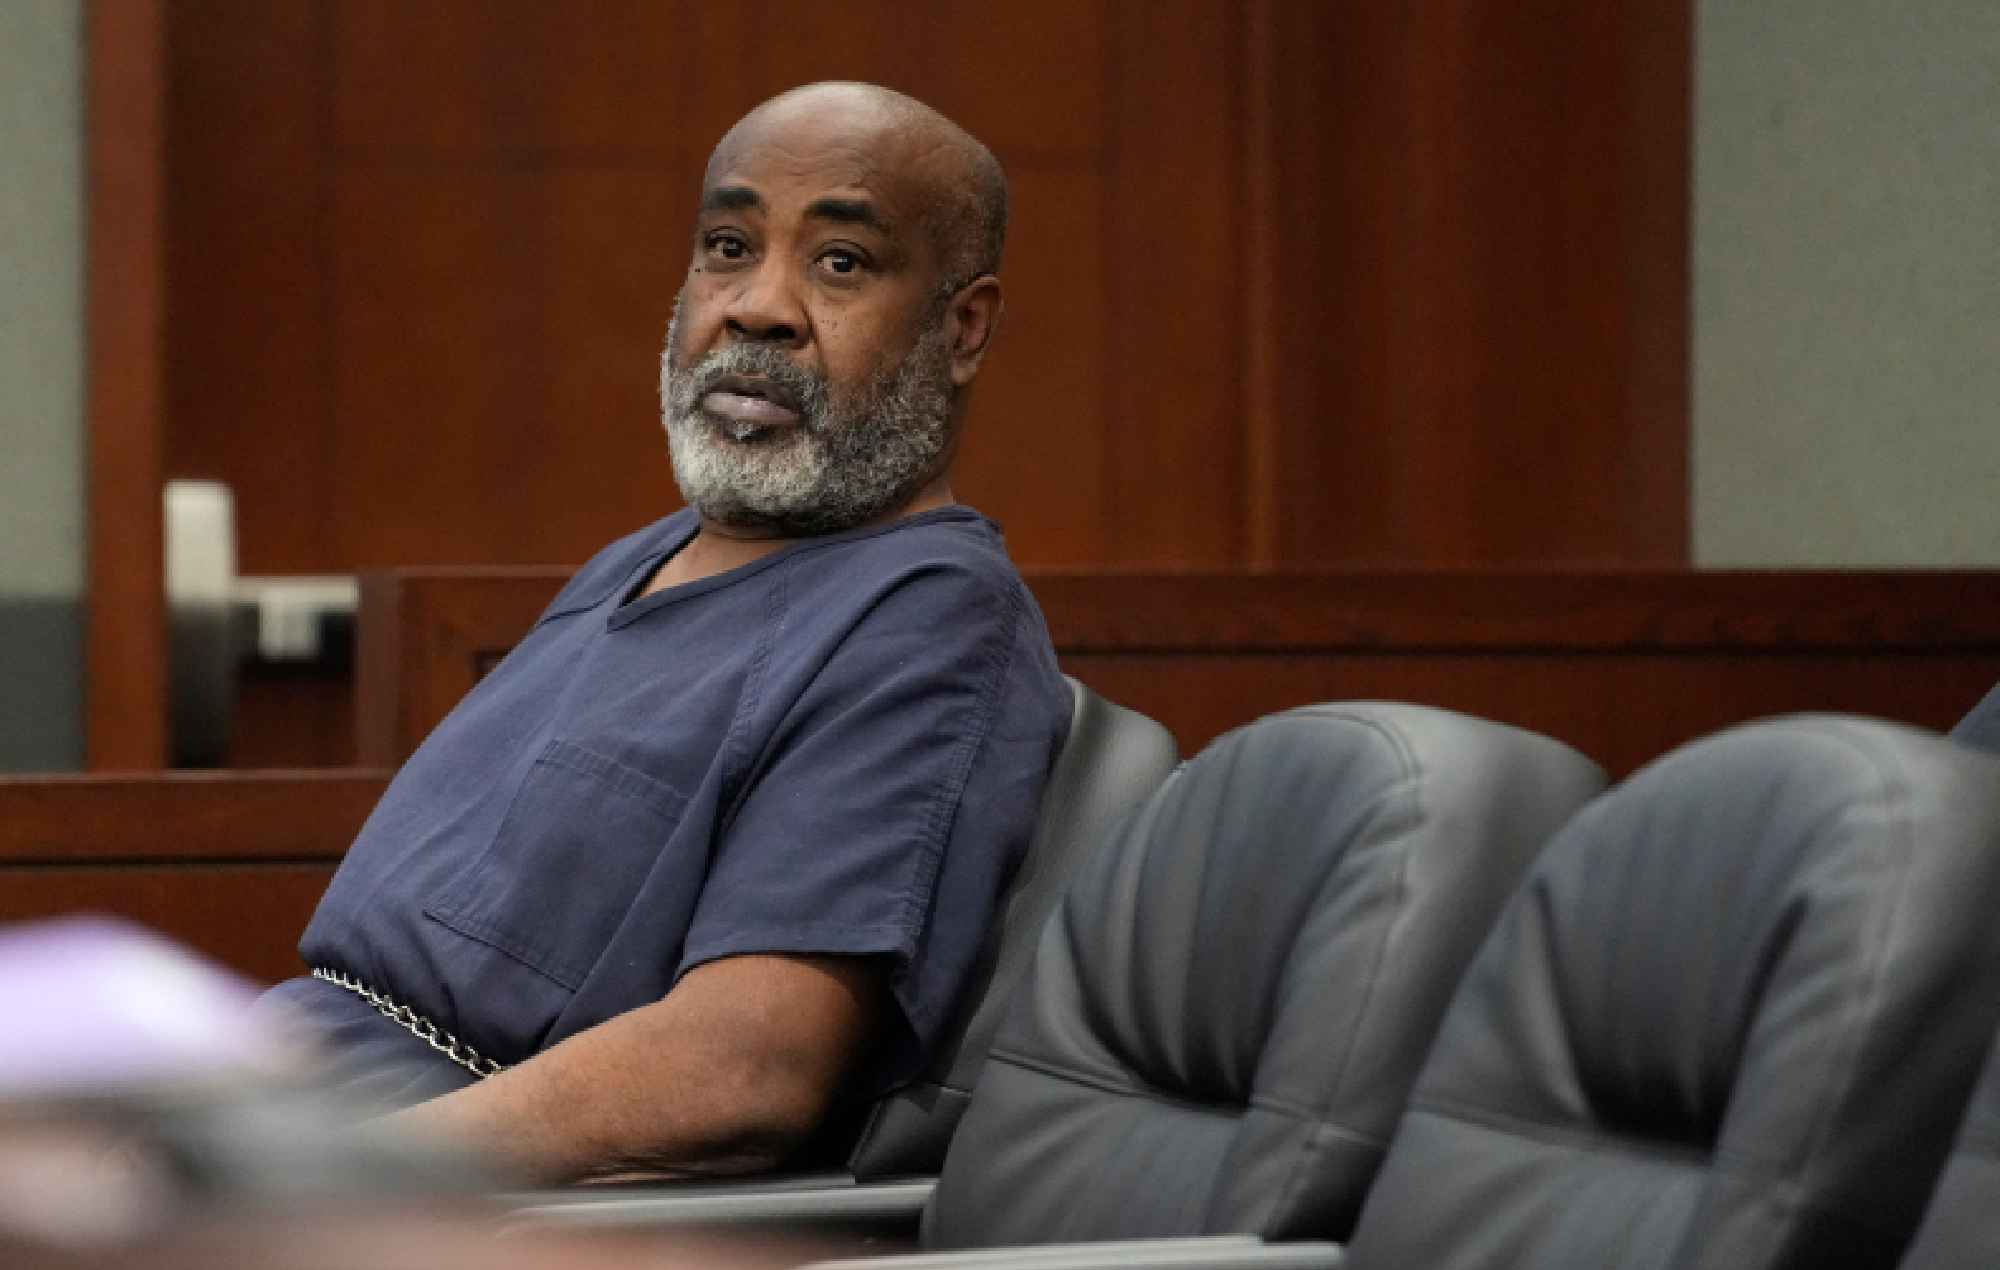 Tupac’s murder suspect denied release despite posting bail over legitimacy concerns